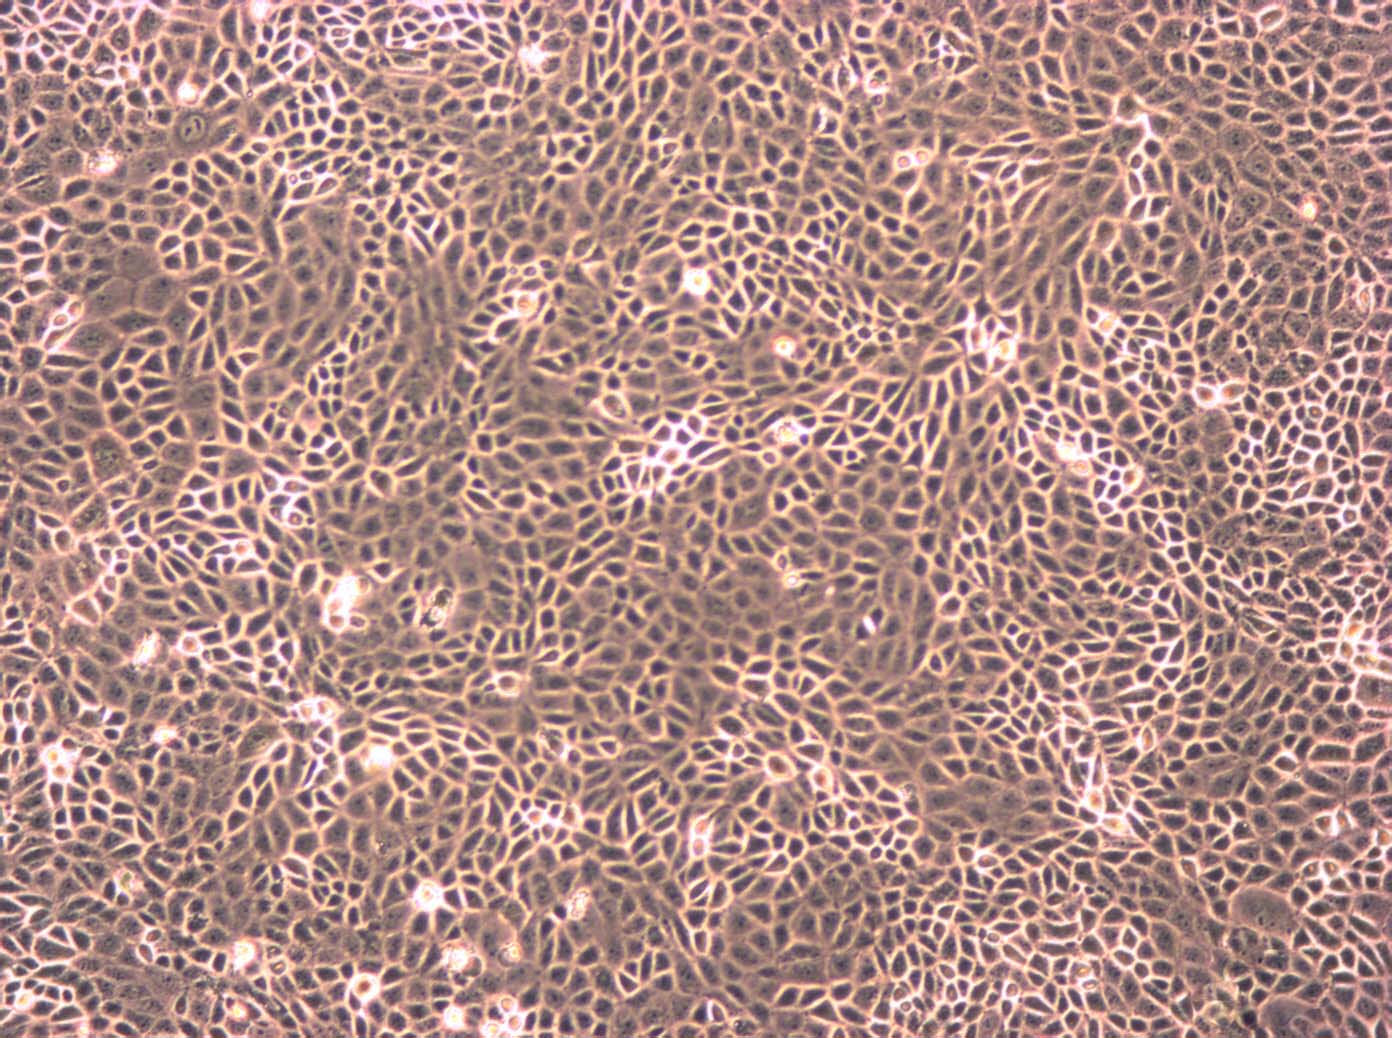 KNS-81 Cells|人神经胶质瘤细胞系,KNS-81 Cells